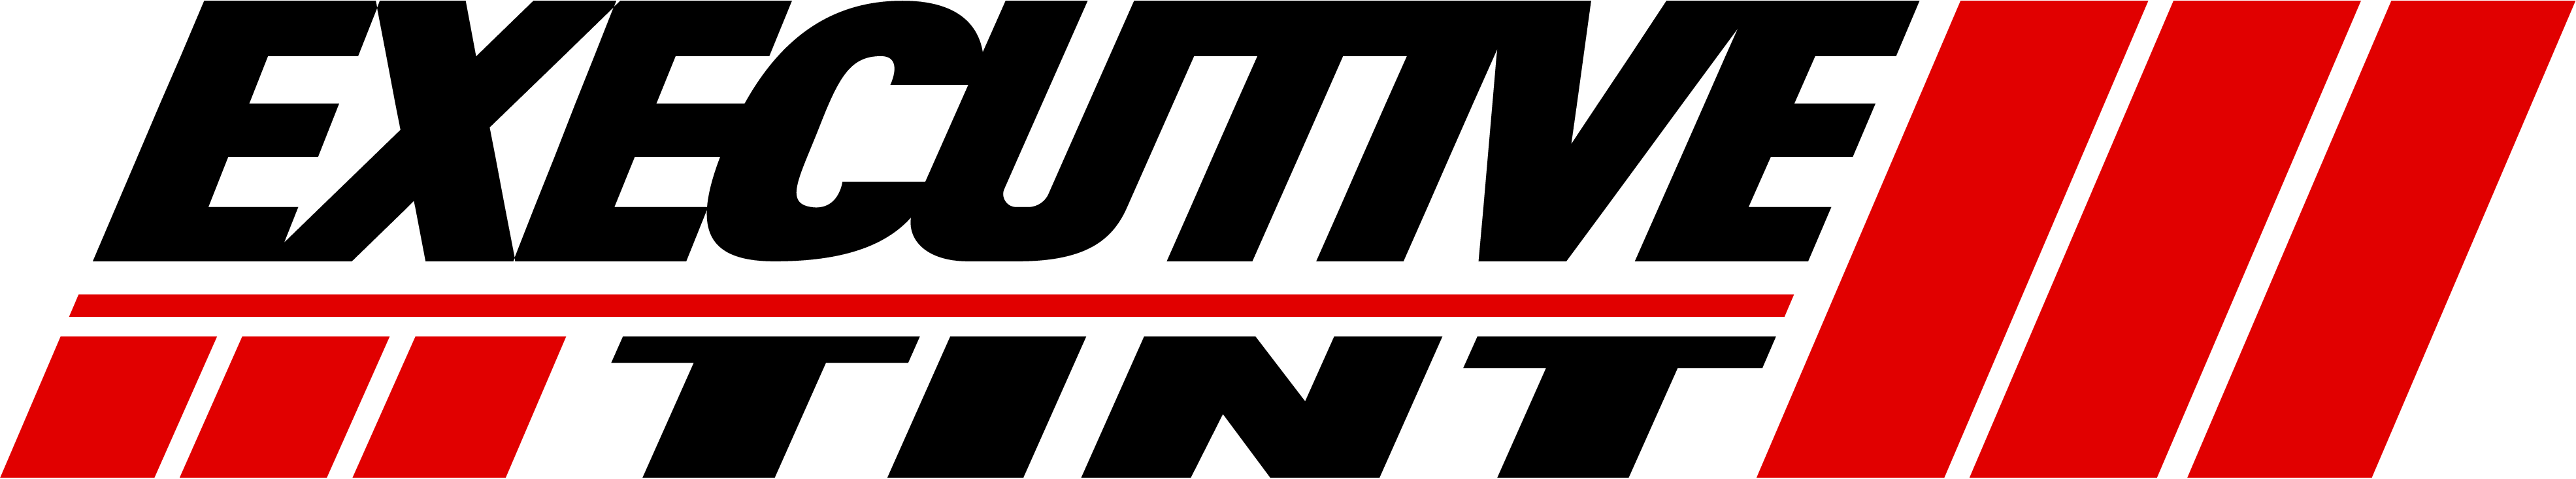 Executive Tint - South logo